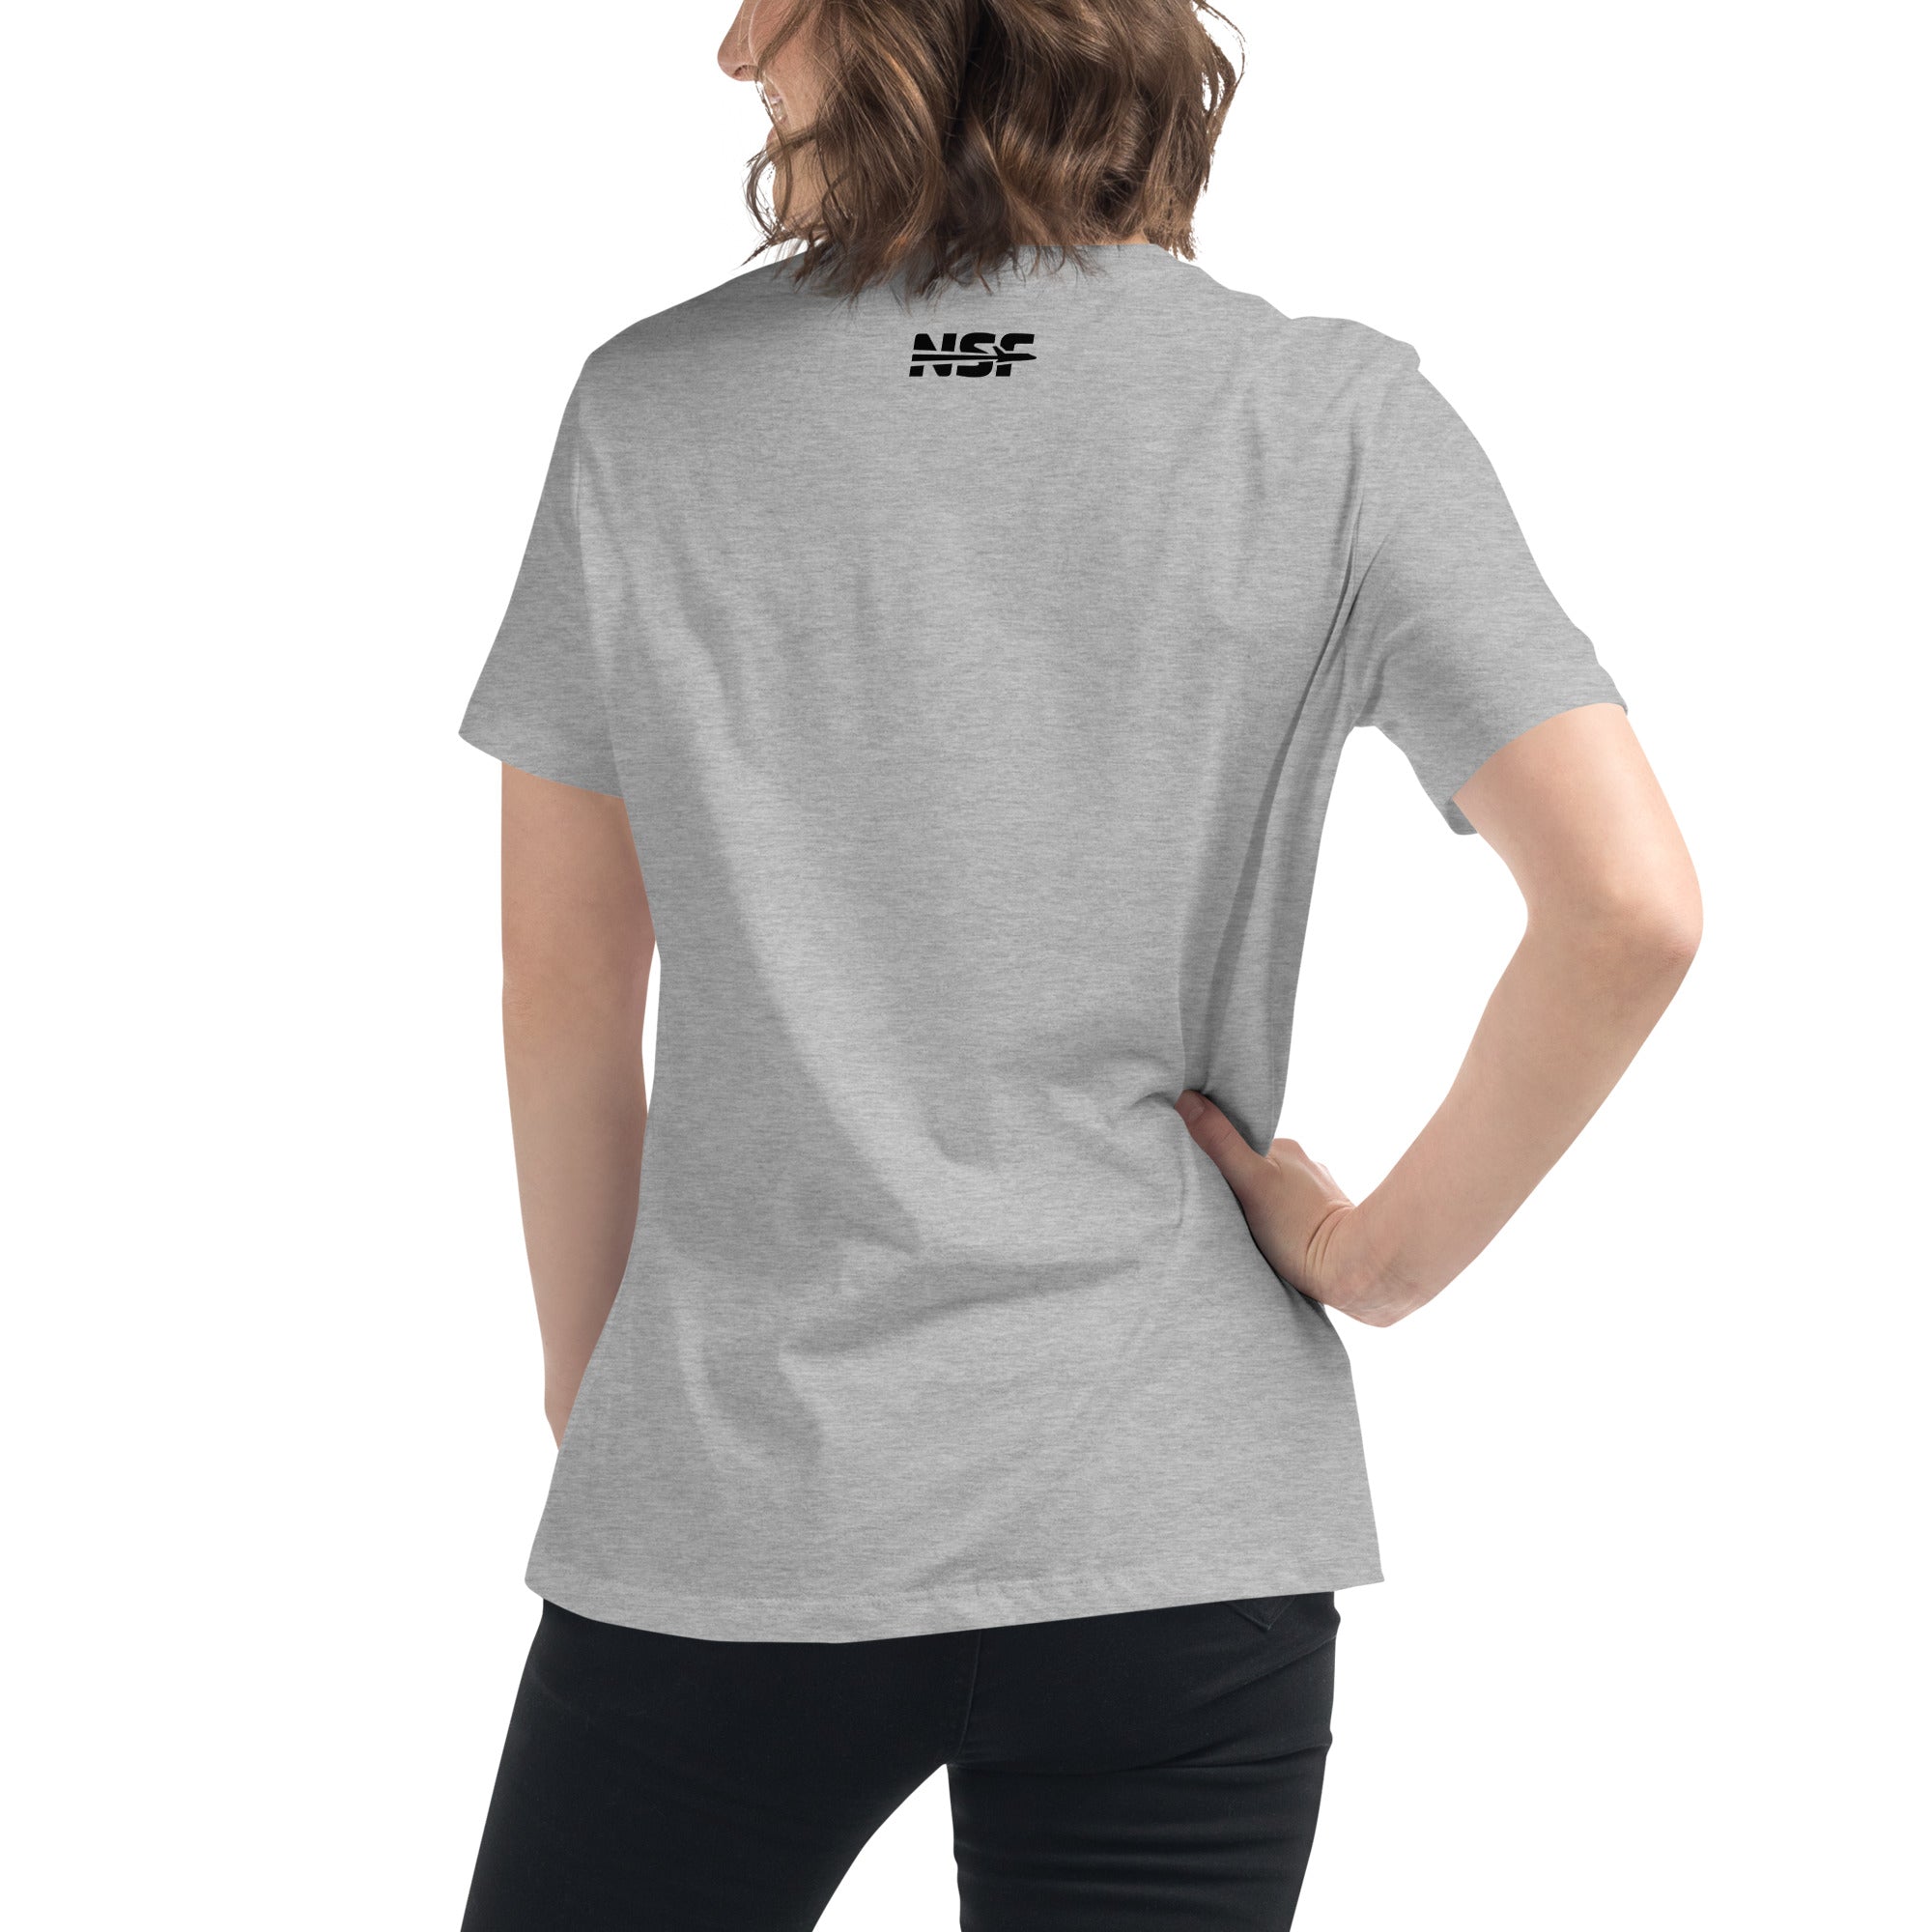 Starbase Retro - Women's T-Shirt